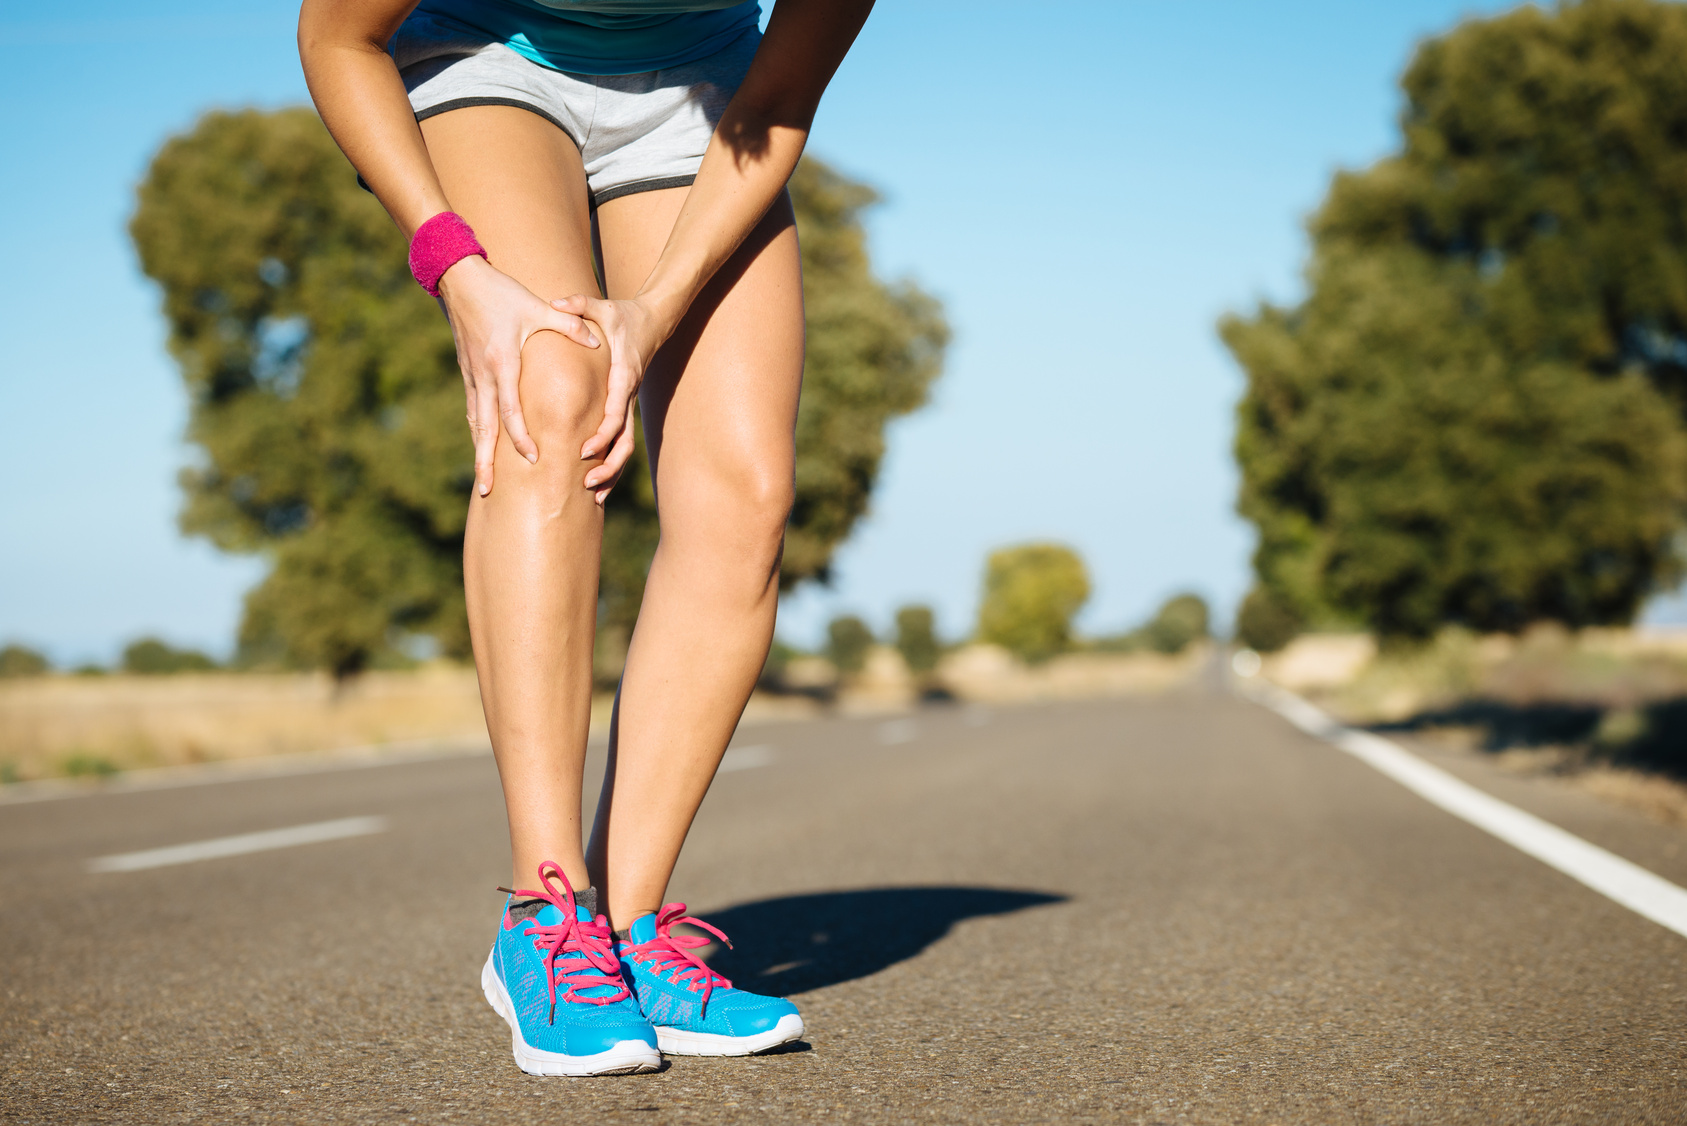 runner with knee pain